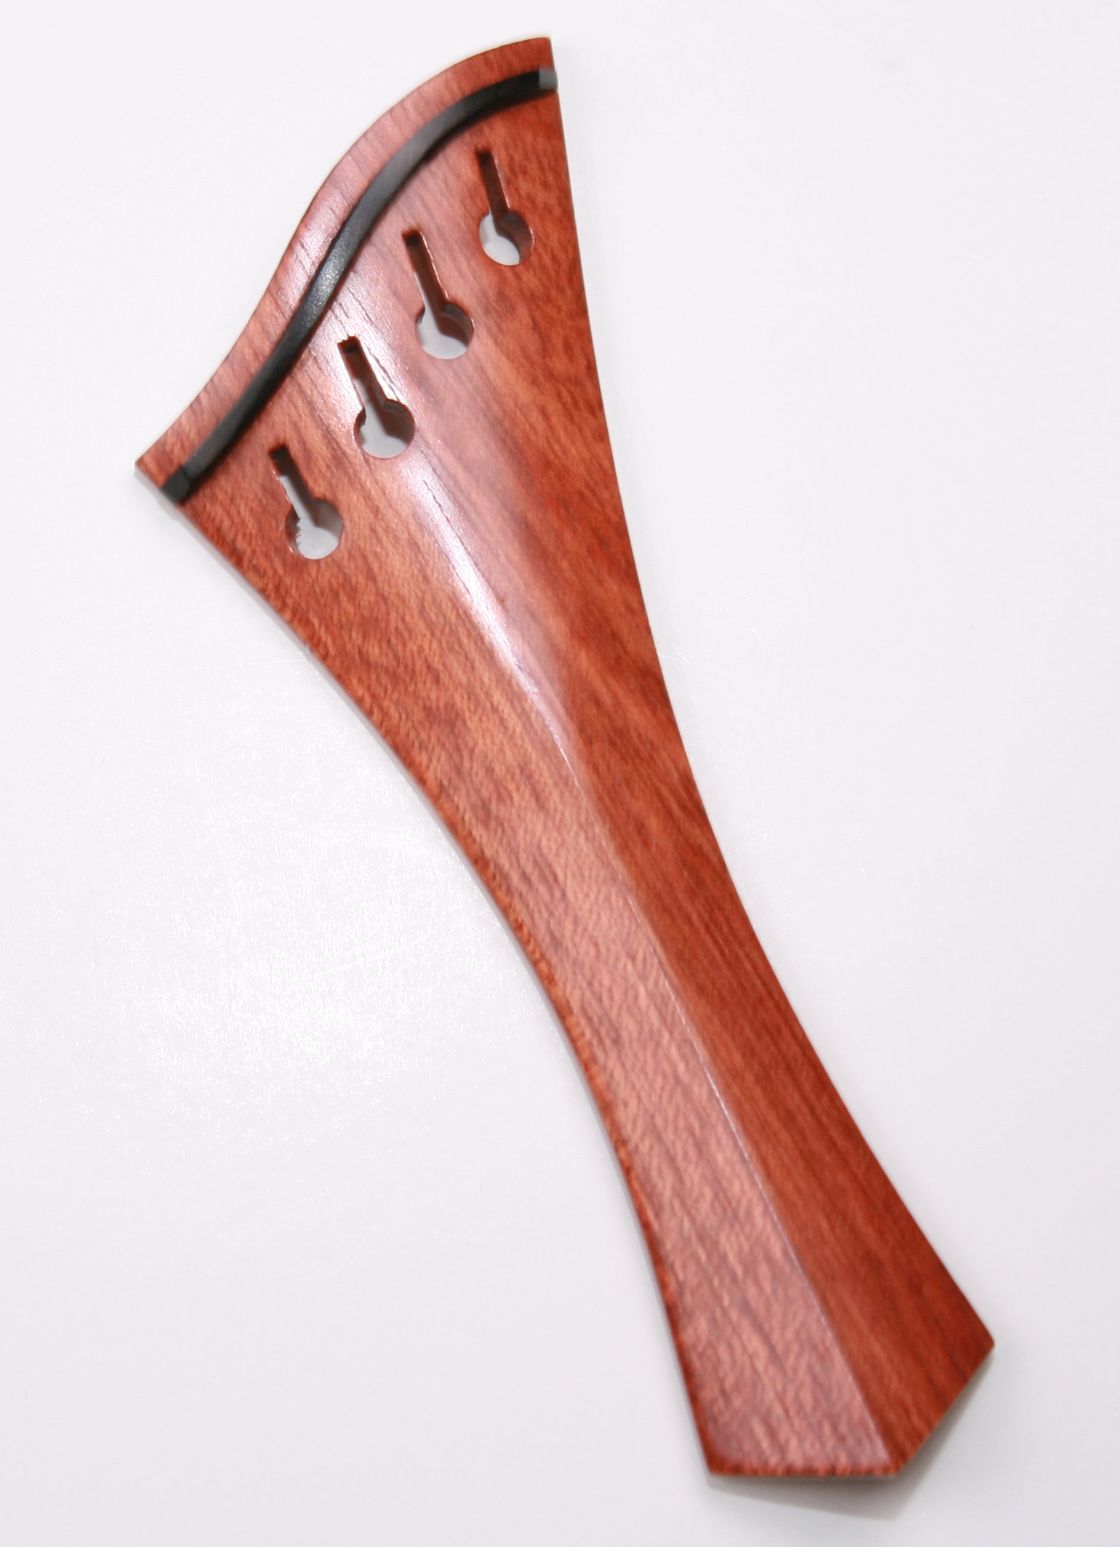 Violin tailpiece-"Schmidt Harp style"-"Mexican Pernambuco"